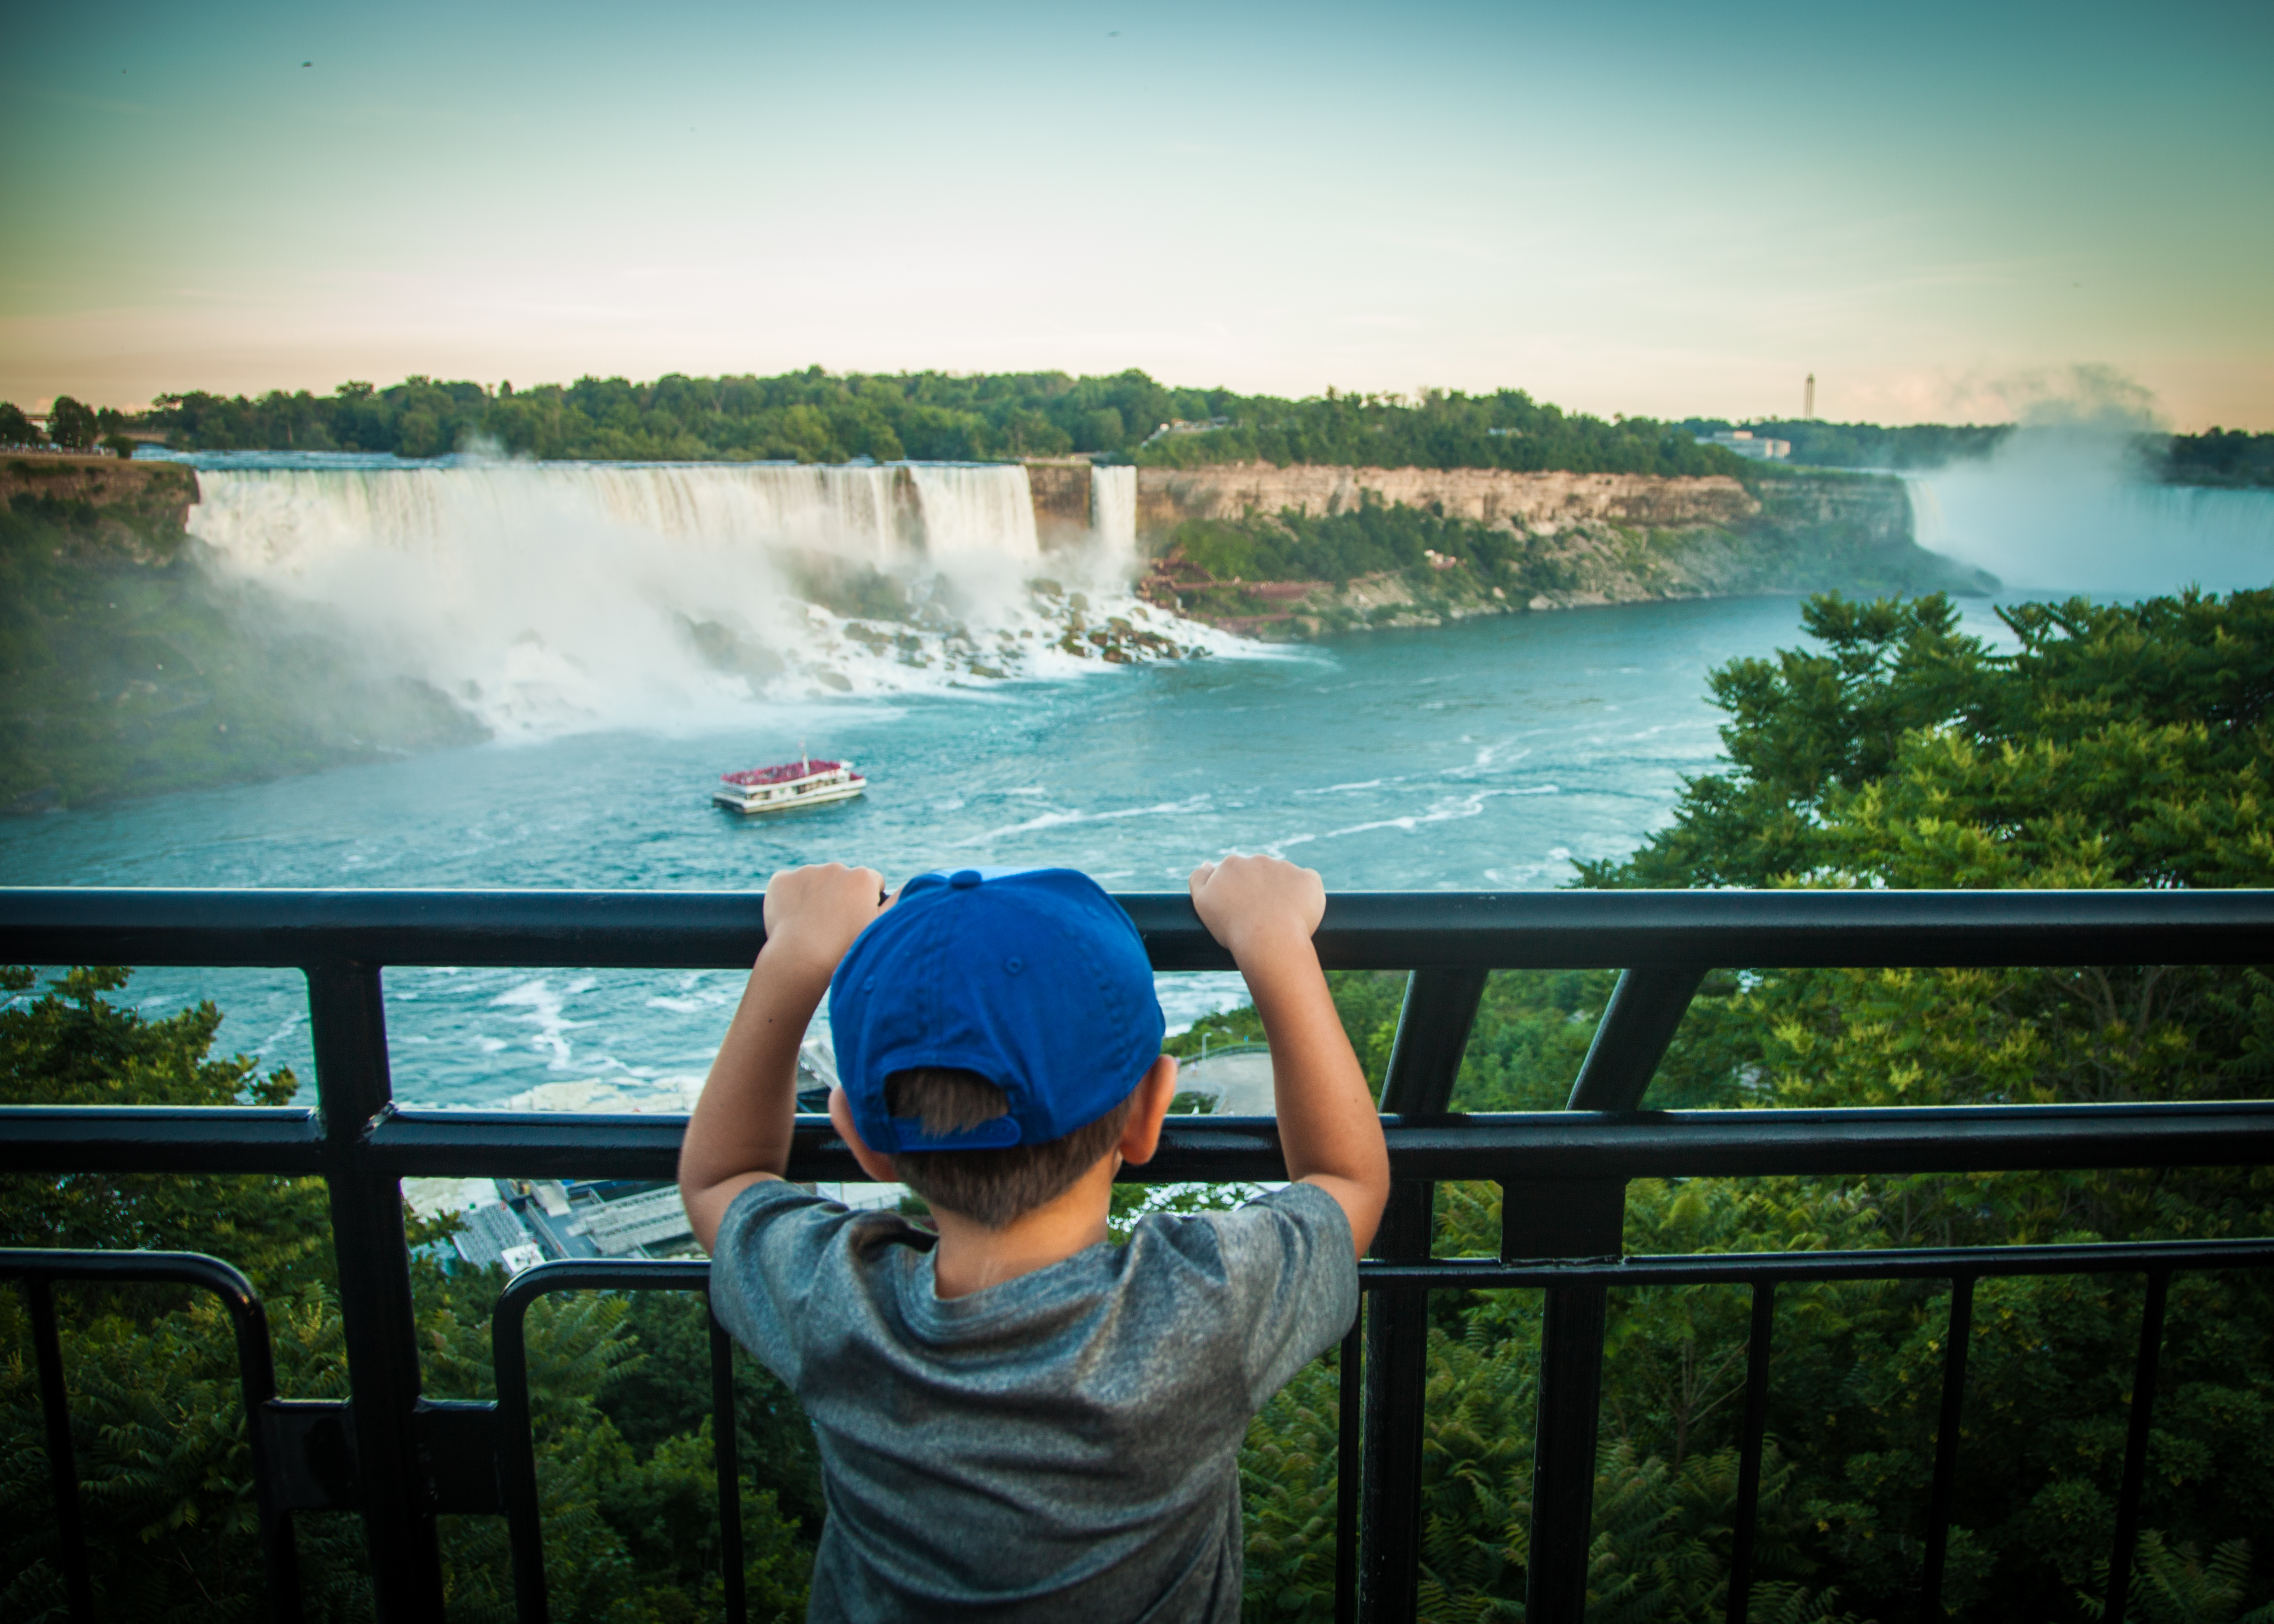 Our day at Niagara Falls, USA and Canada